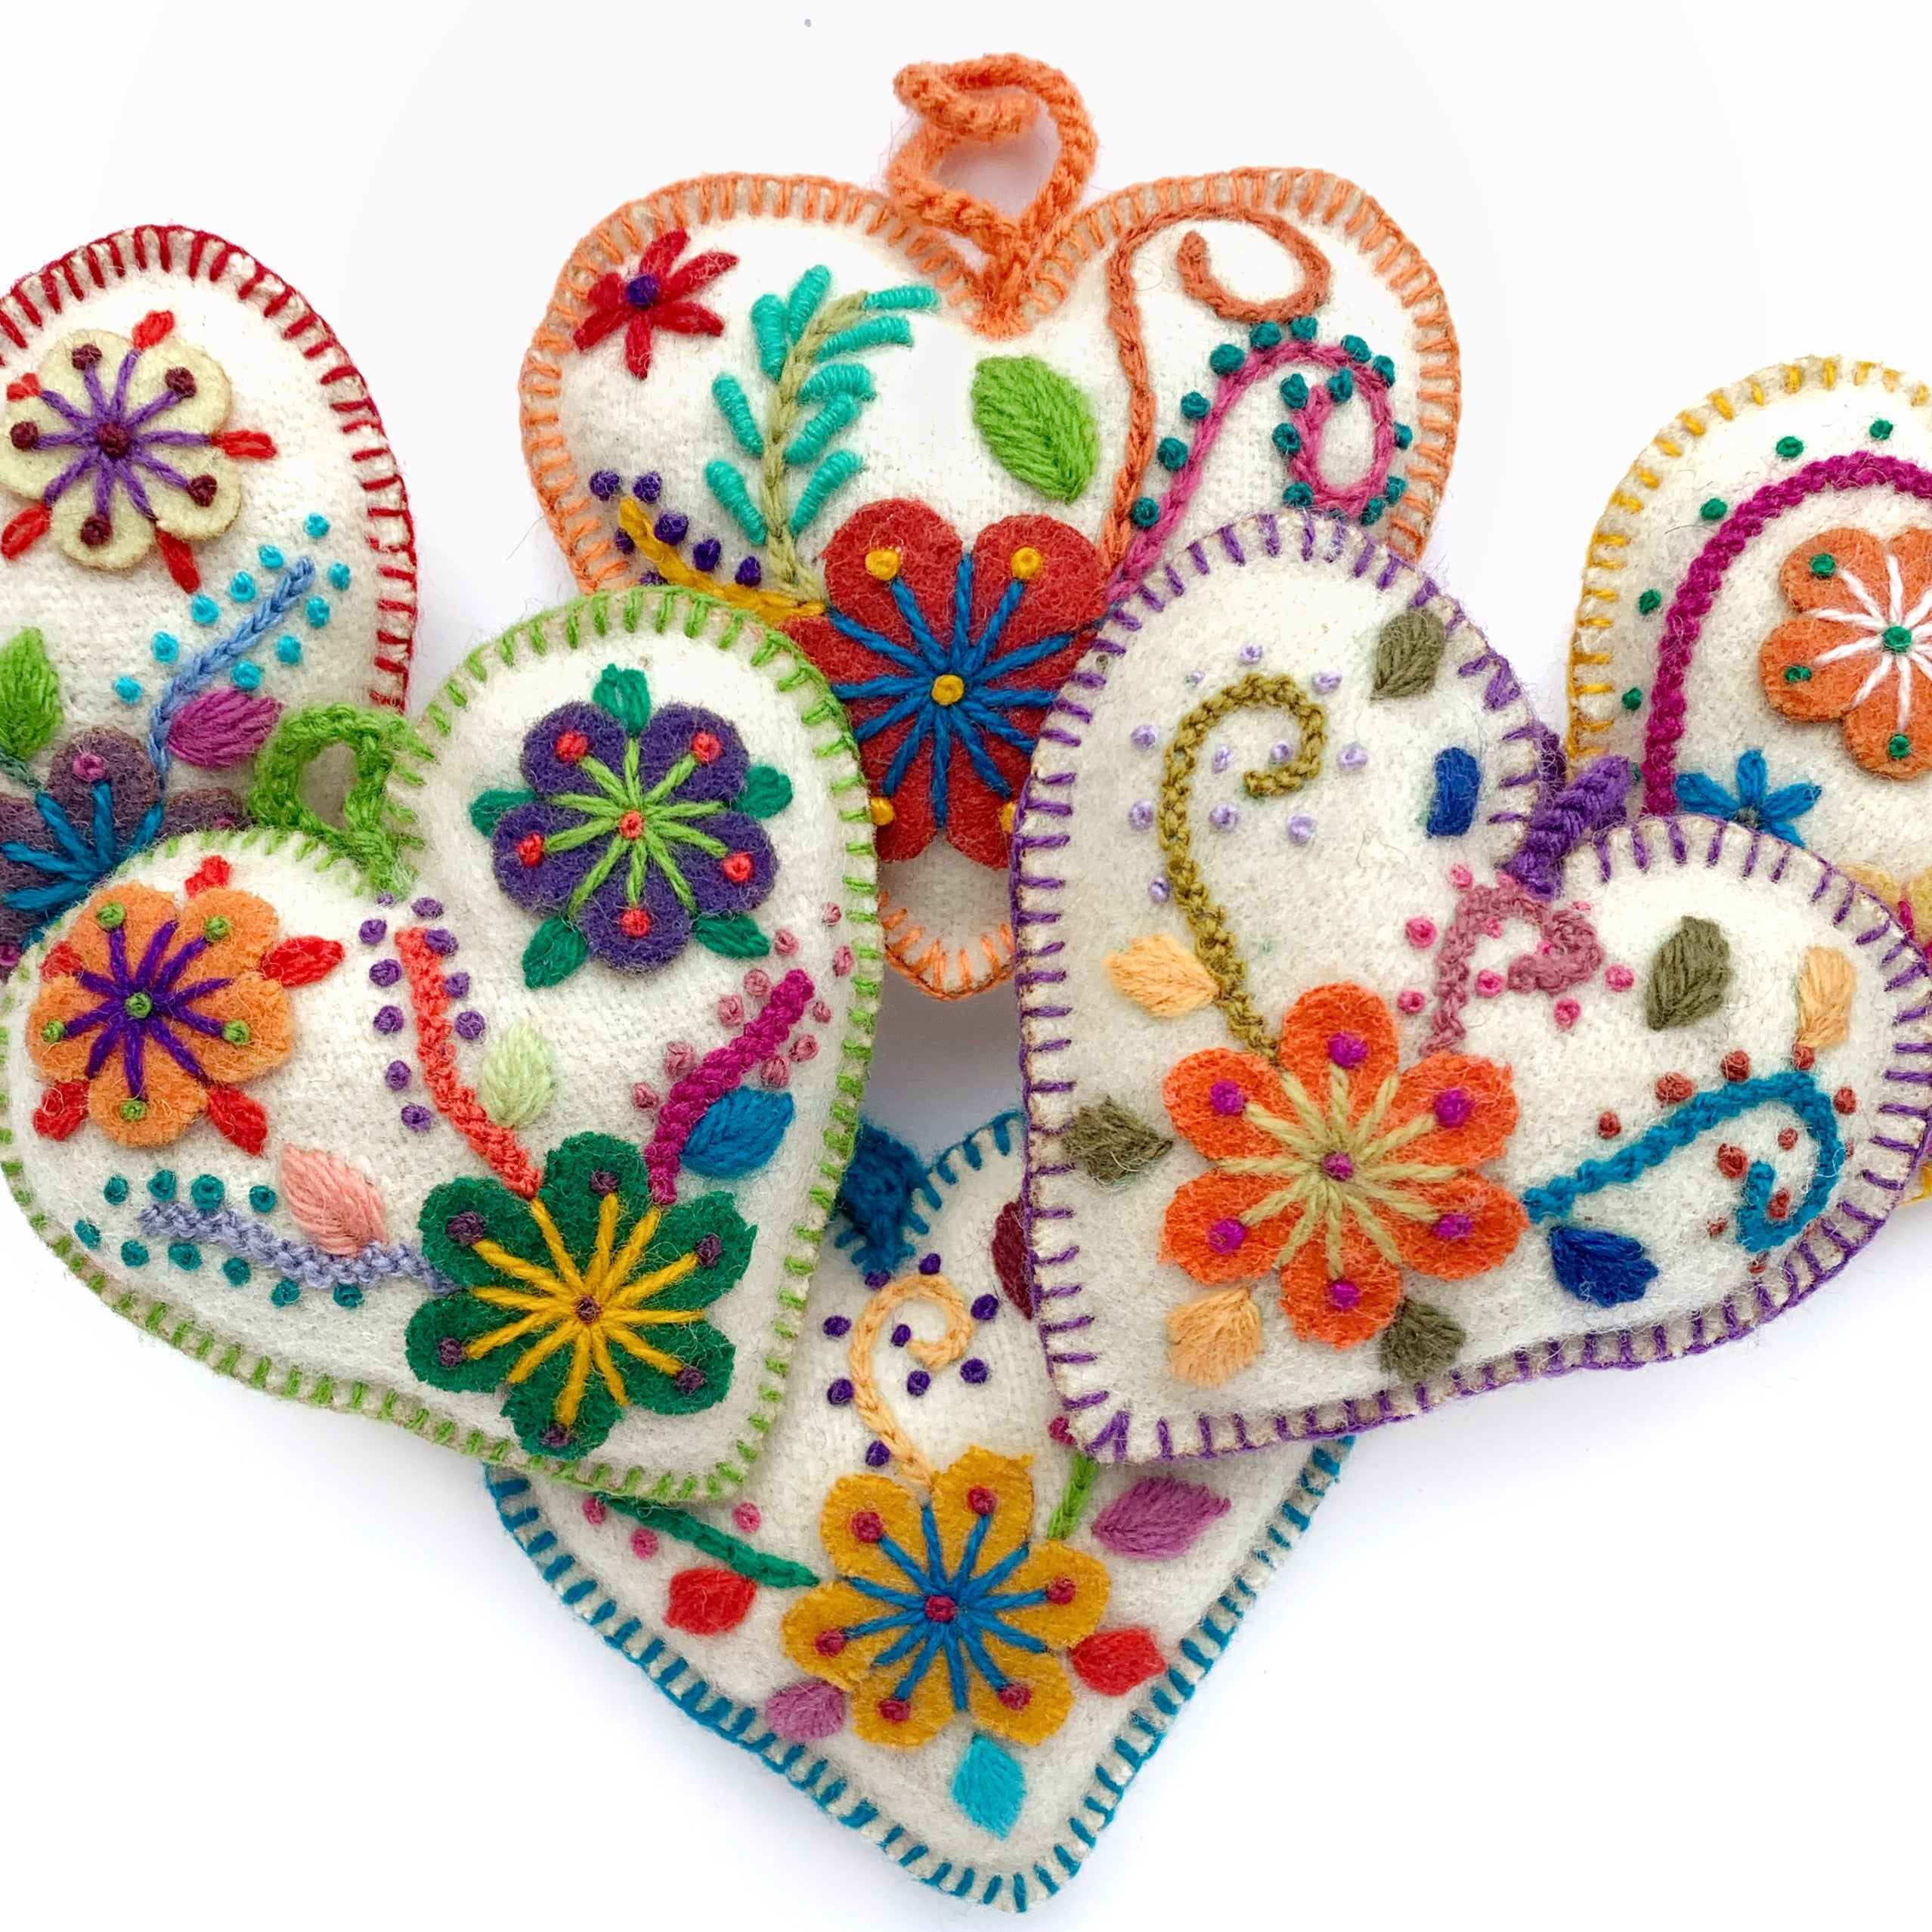 Handmade Heart Christmas Ornament | Valentines Gift | Heart Ornament ...